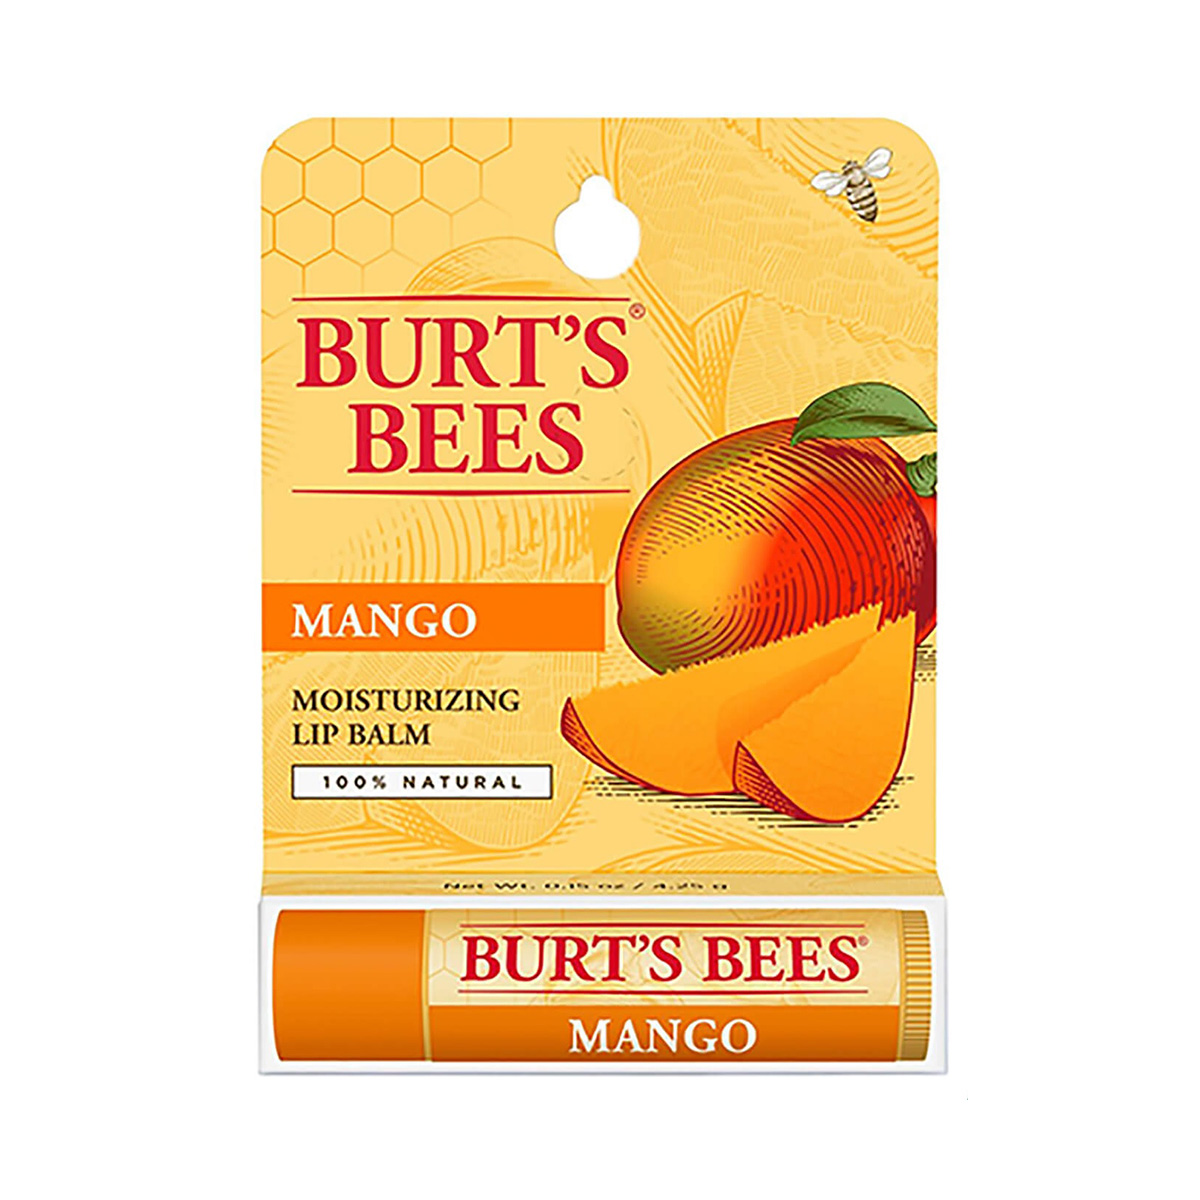 Burt's Bees Mango Lip Balm 4.25g Blister Pack